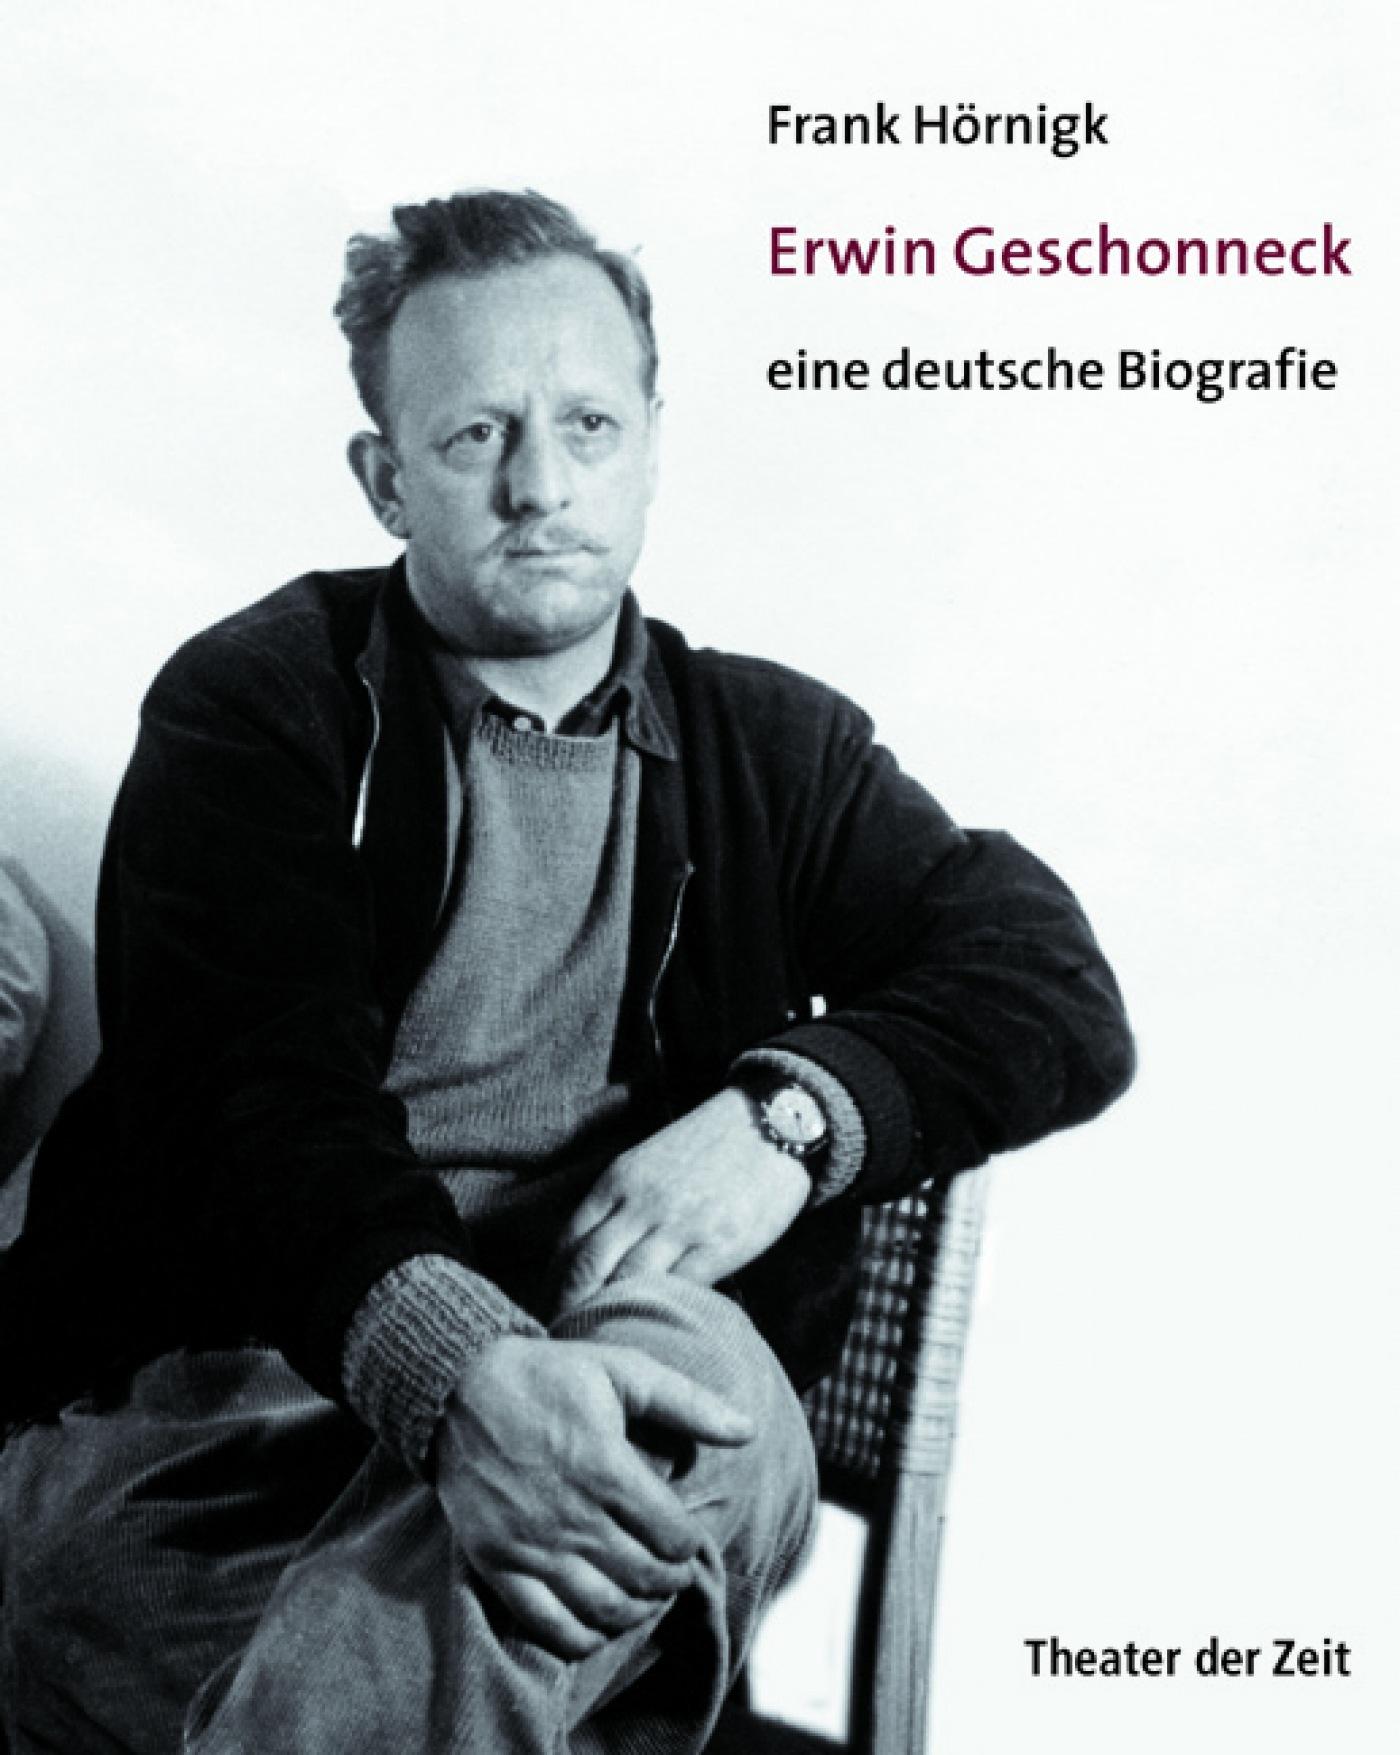 "Erwin Geschonneck"